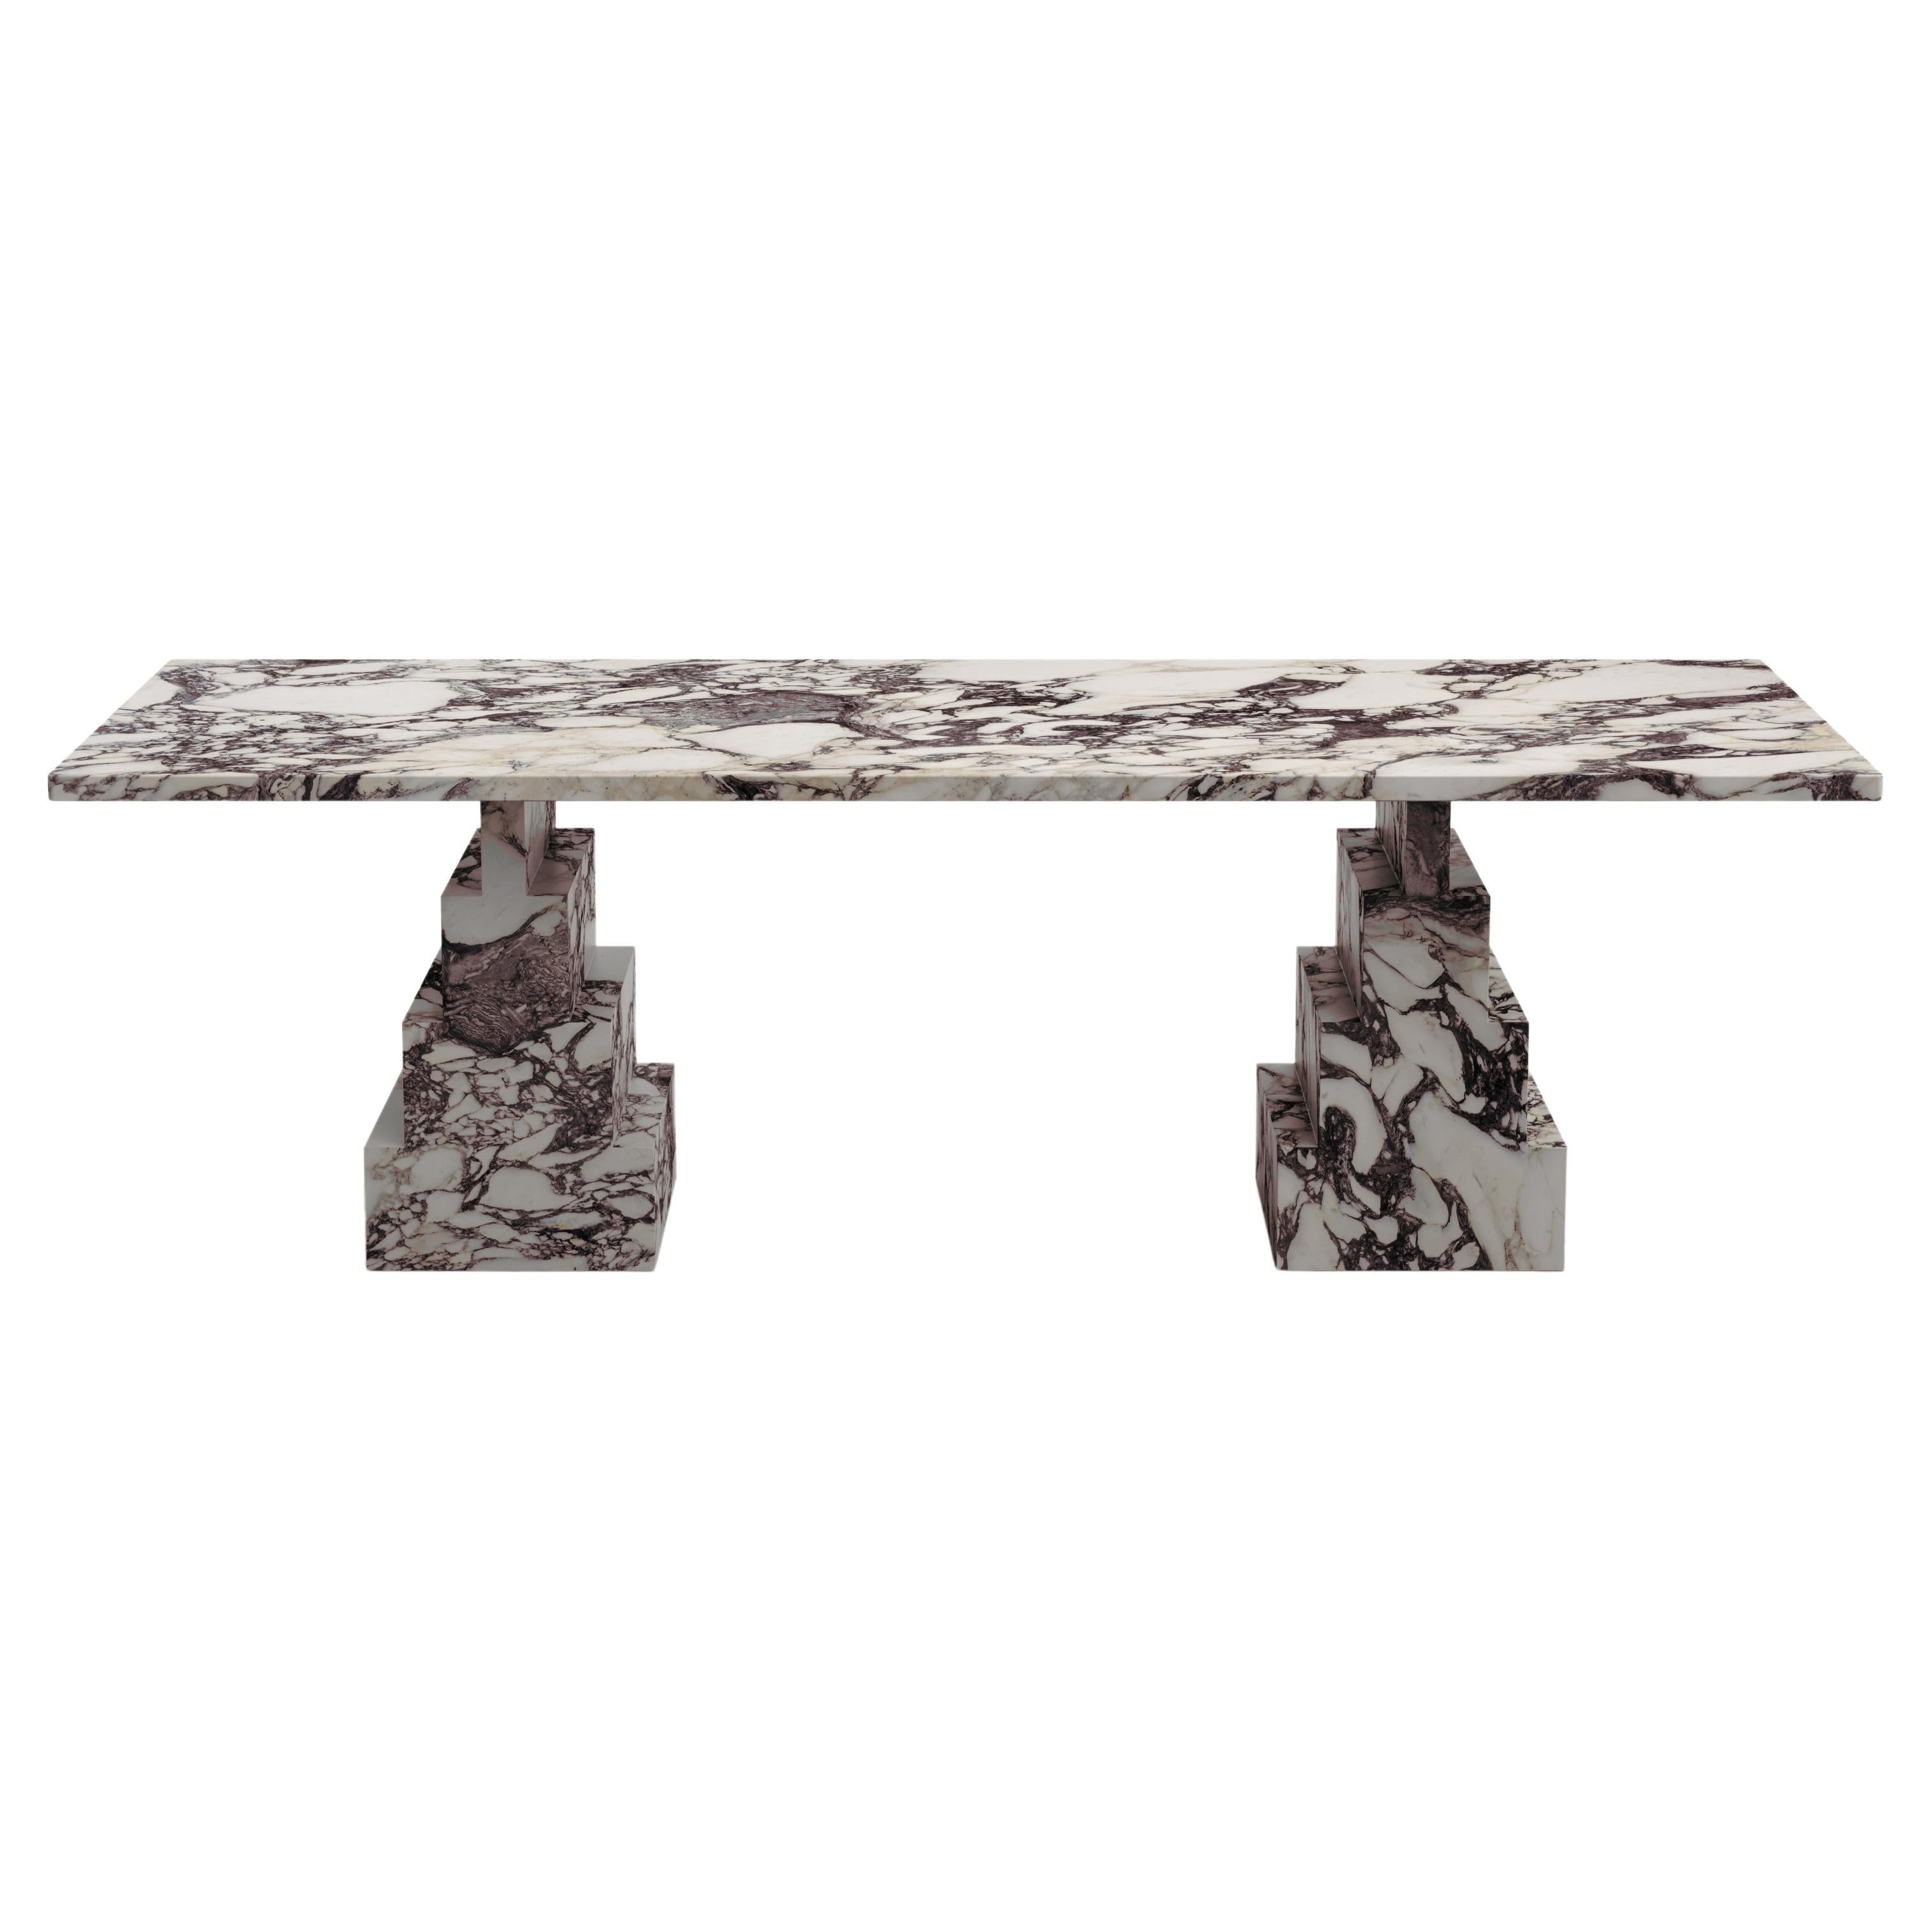 NORDST NIKO Dining Table, Italian Calacatta Marble, Danish Modern Design, New